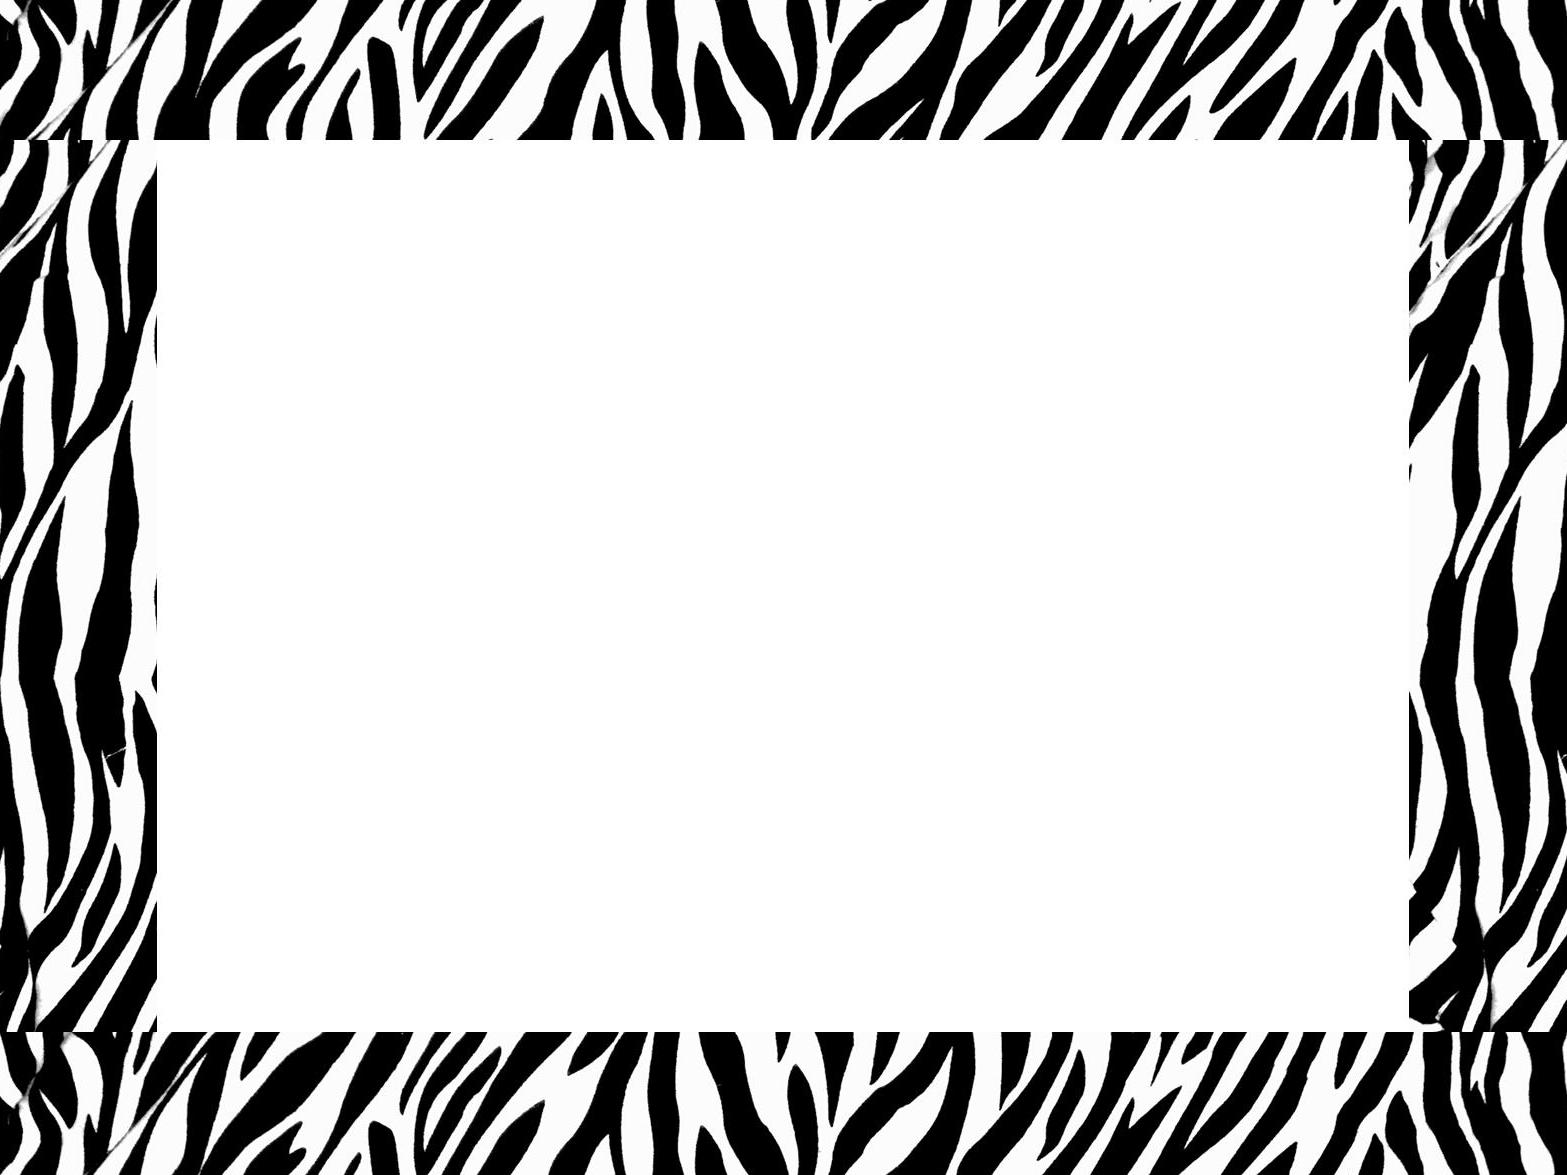 Zebra Border Template | Free Download Clip Art | Free Clip Art 